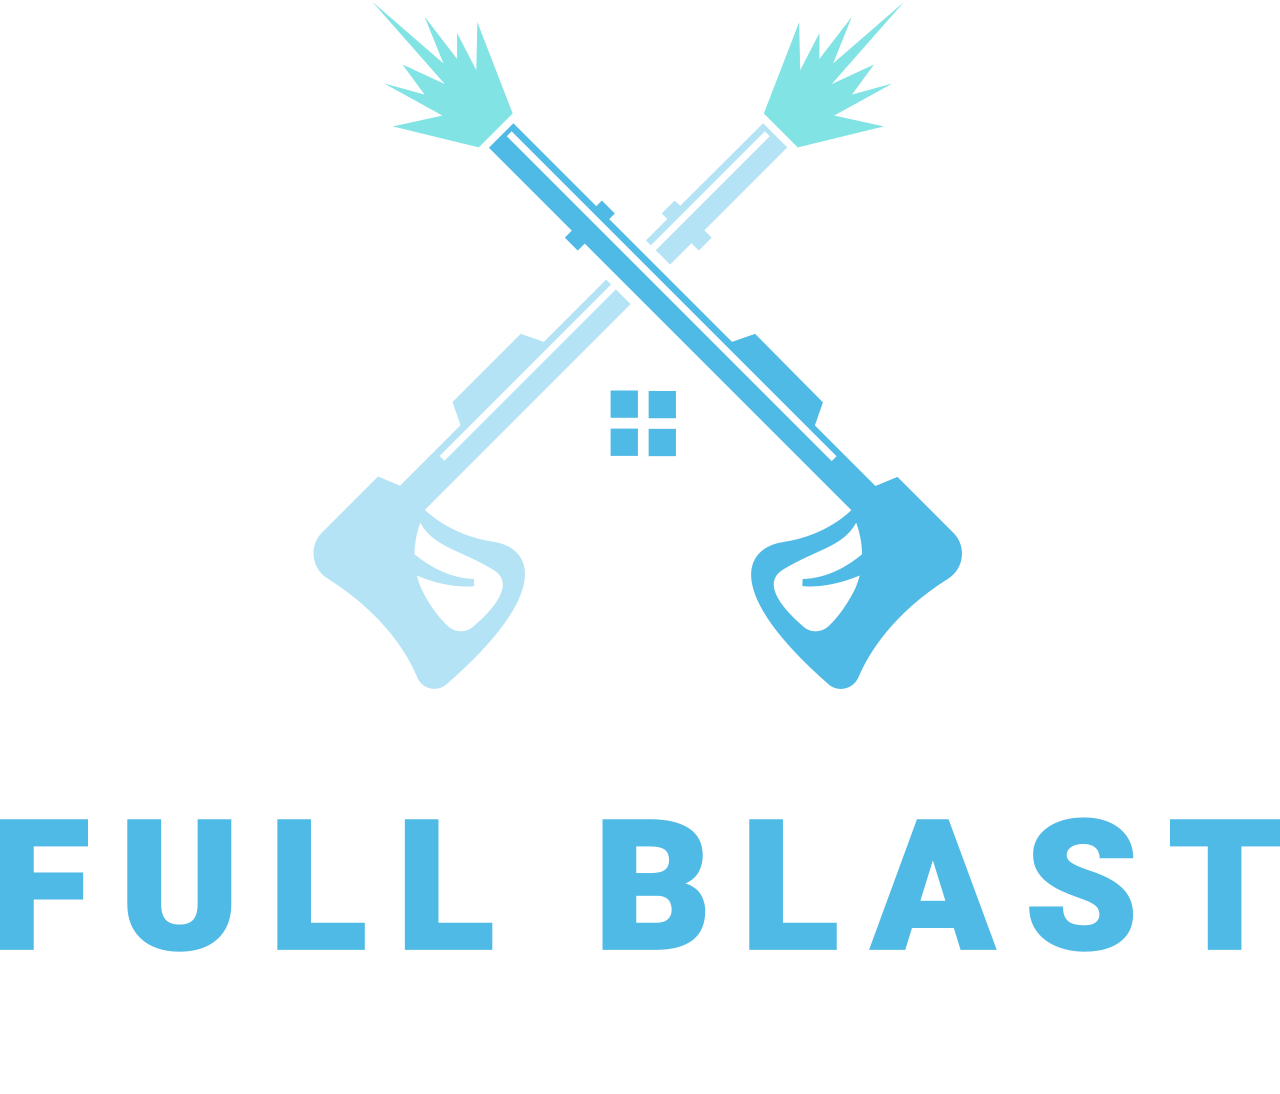 FULL BLAST's web page